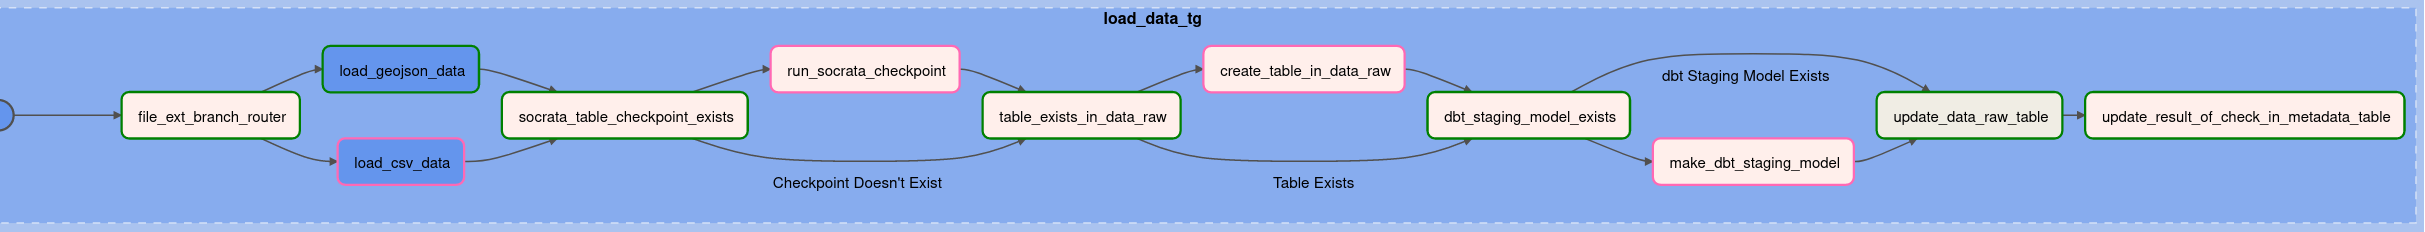 load_data_tg TaskGroup High Level